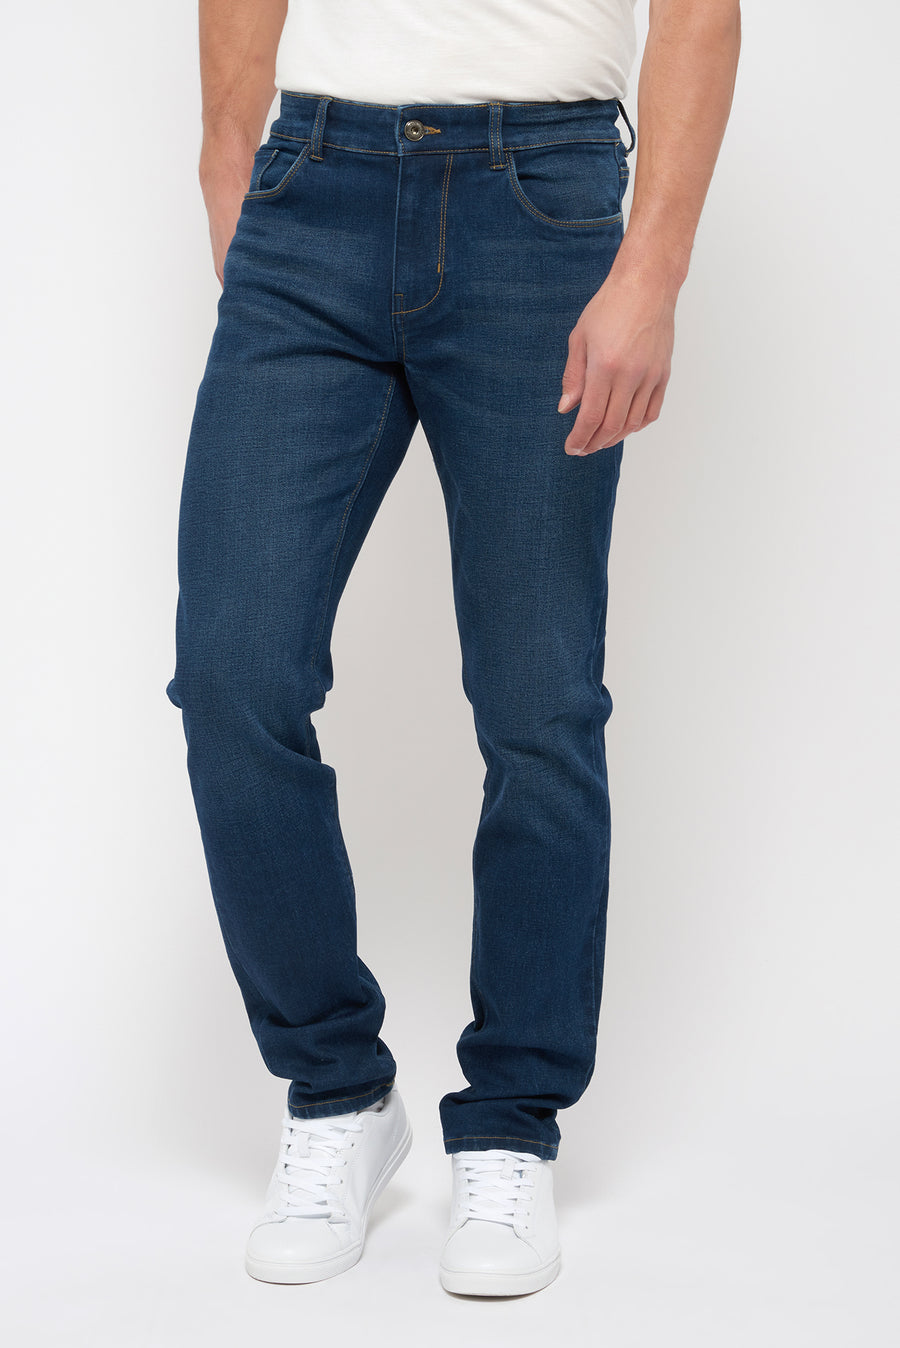 Pantalon jean recyclé - Coupe slim - Ton foncé